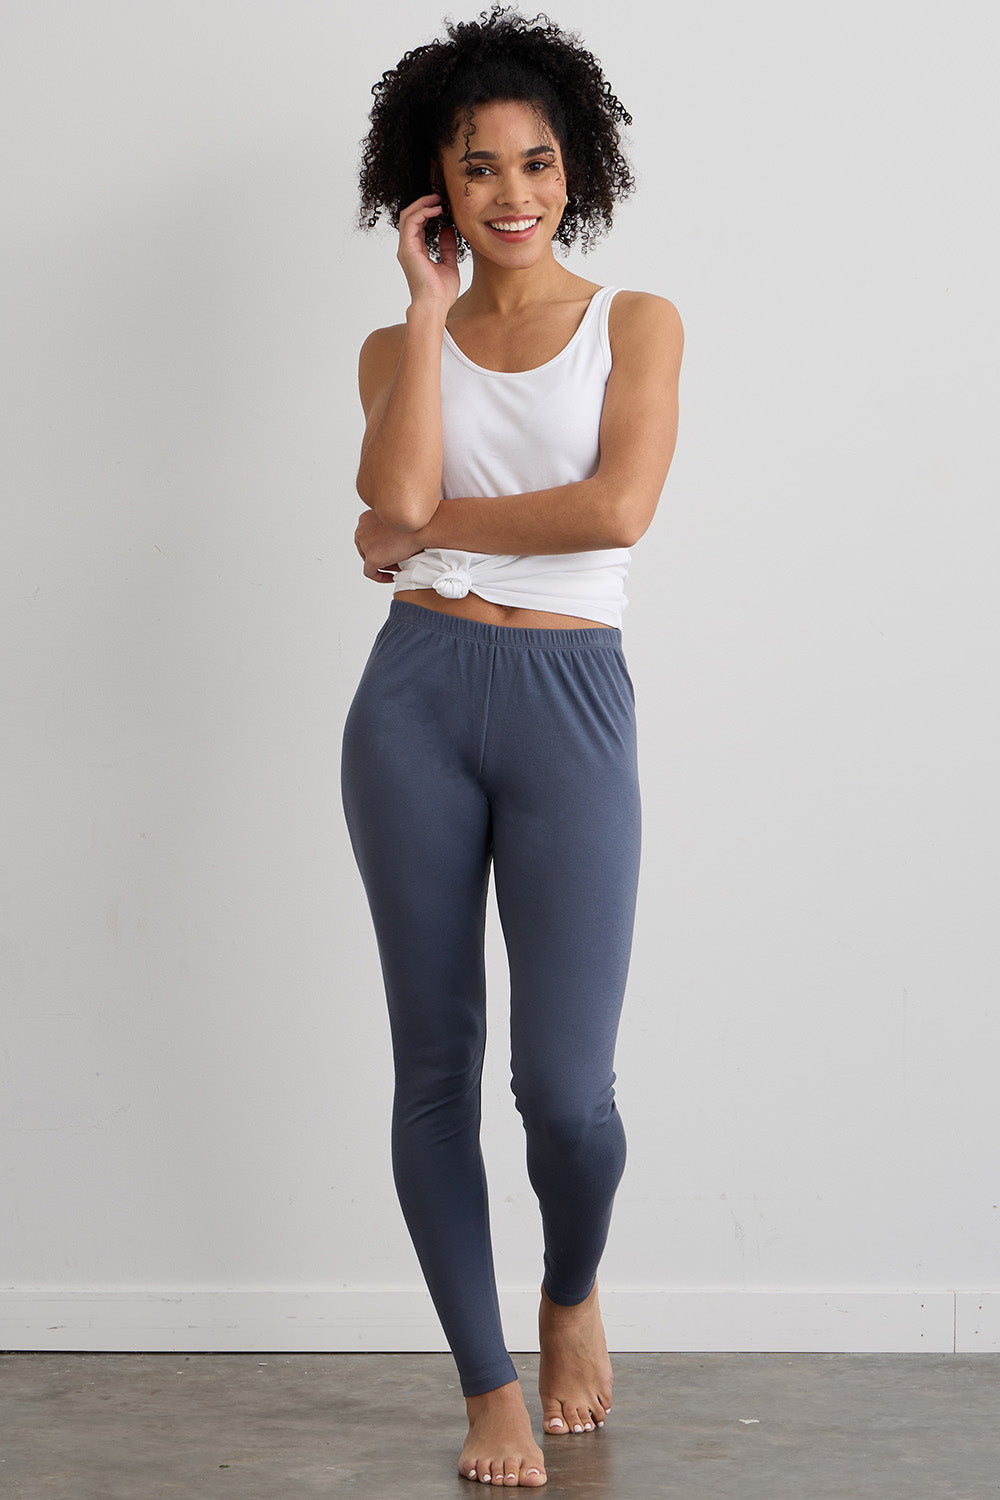 Gibobby Leggings 100% Cotton Yoga Pants for Women High Women's Control  Compression Leggings Black Yoga Pants for Women ShortHigh Waist Stretch